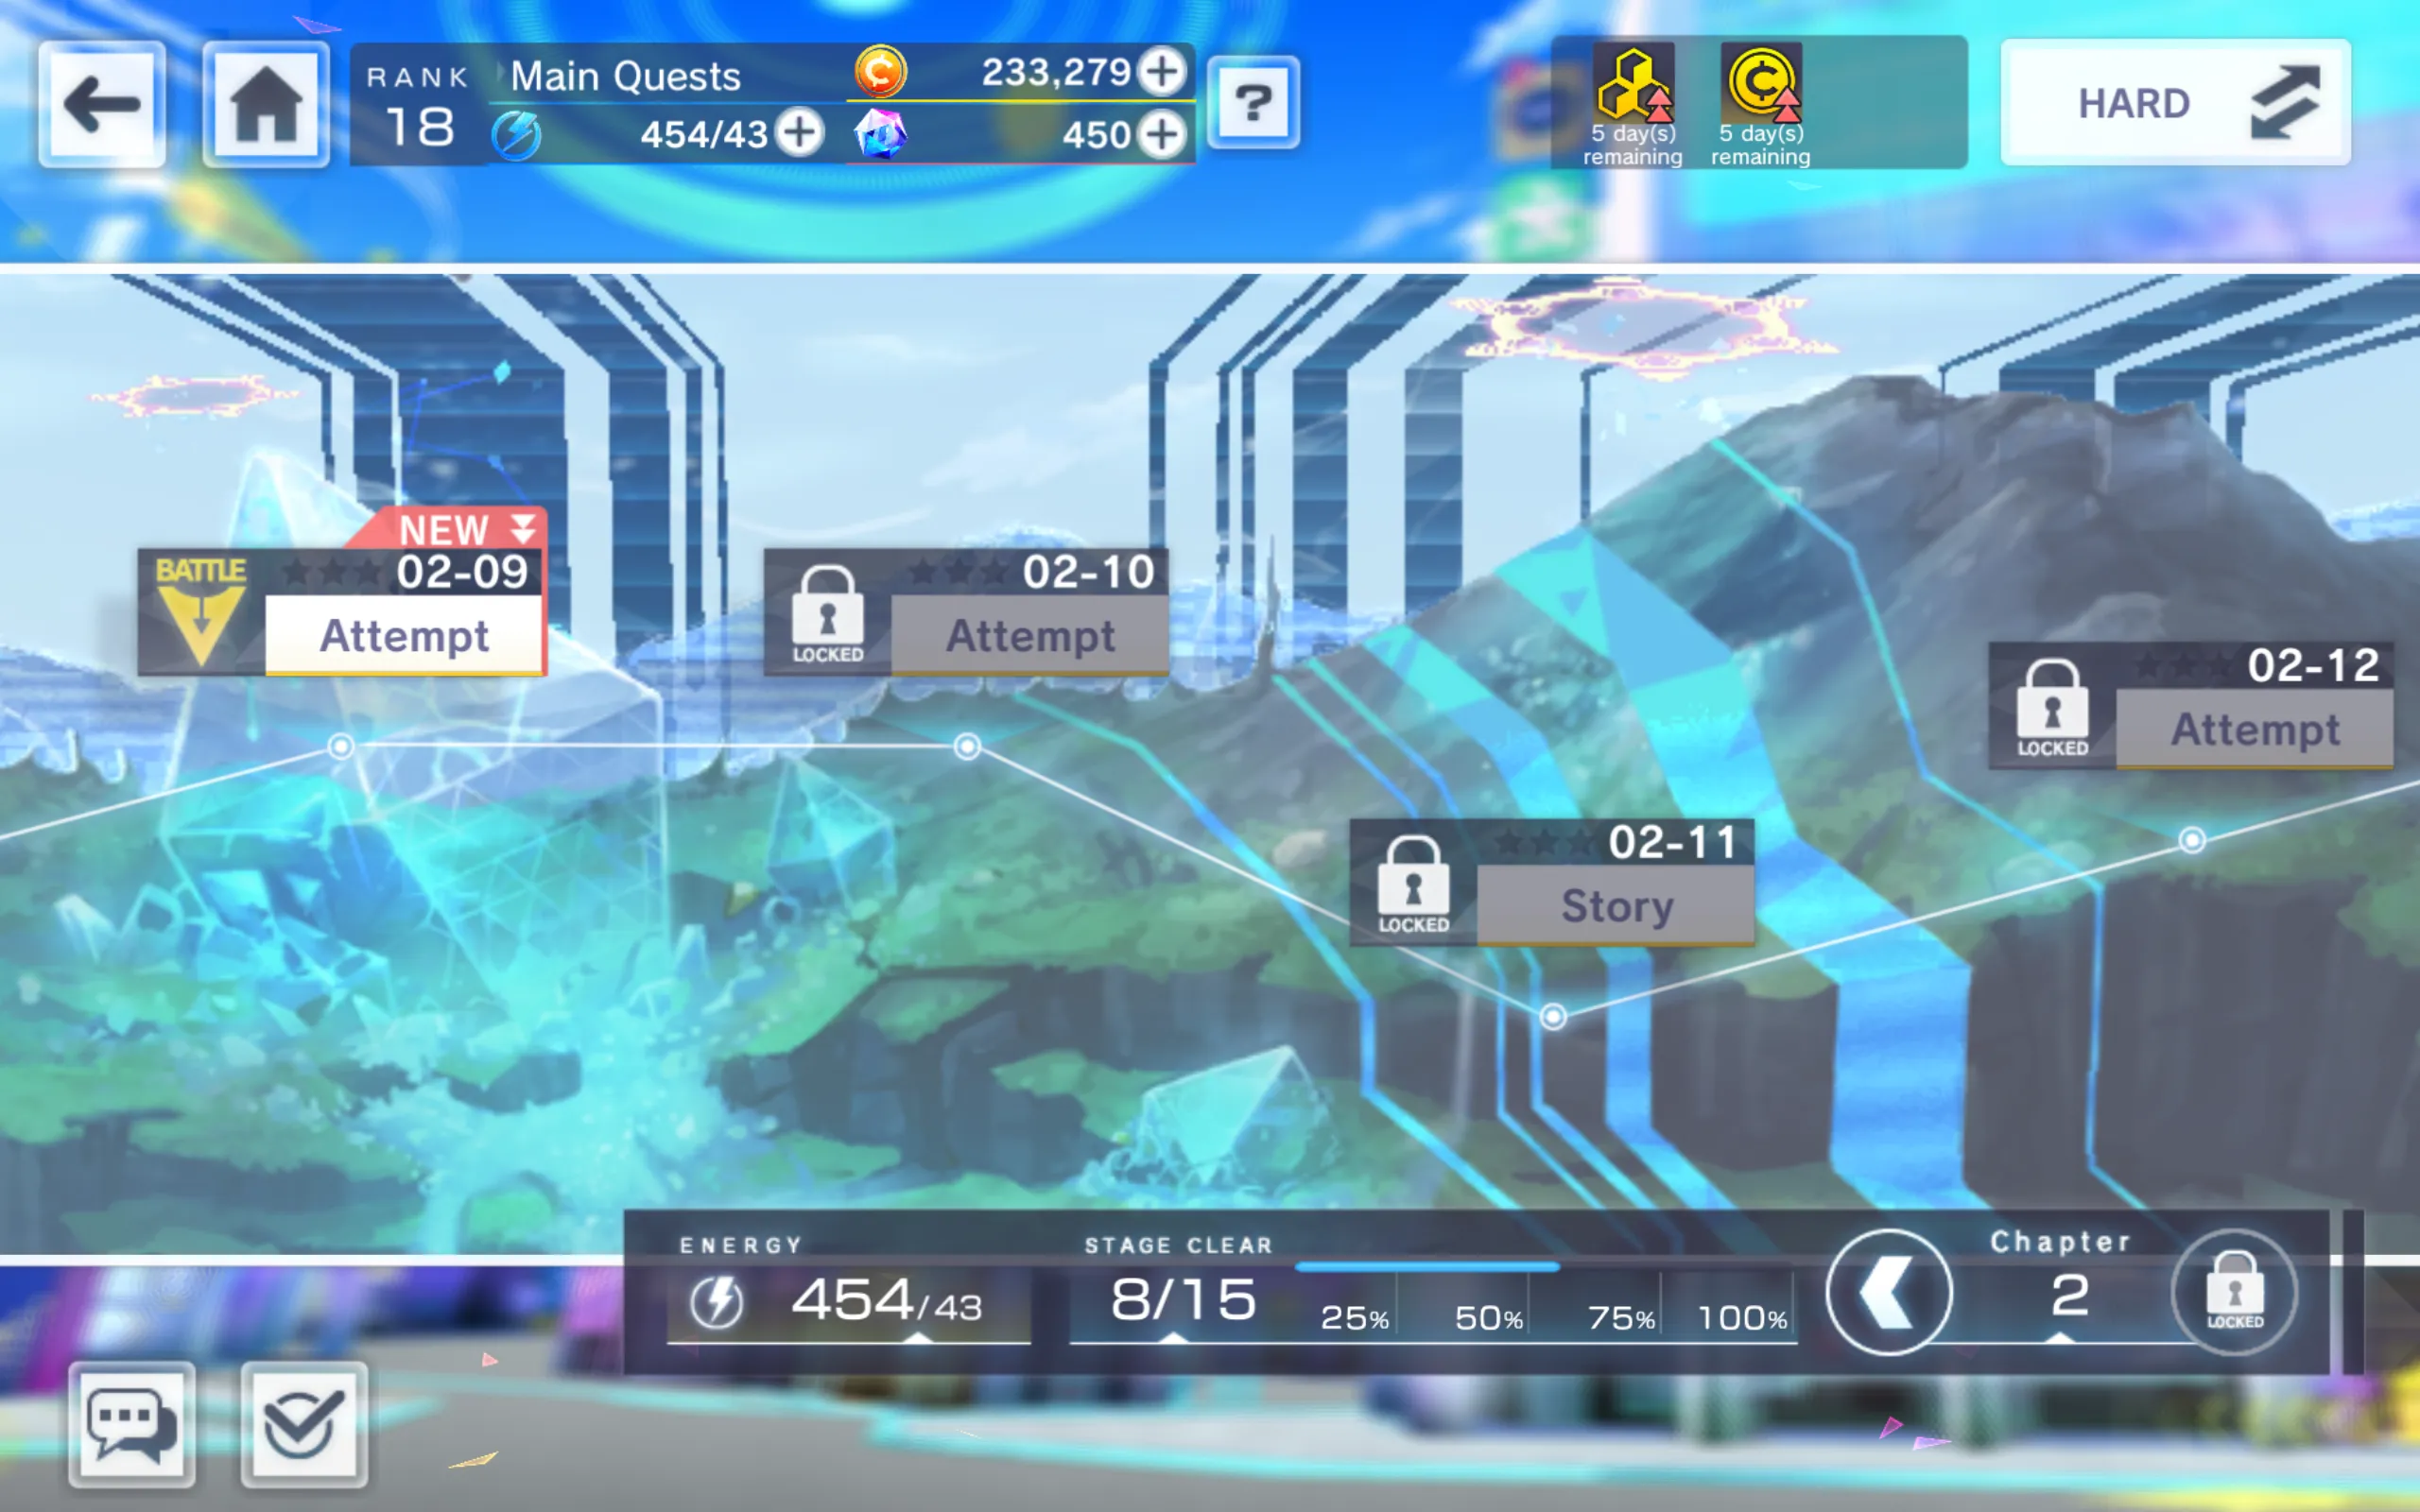 Main quest screen